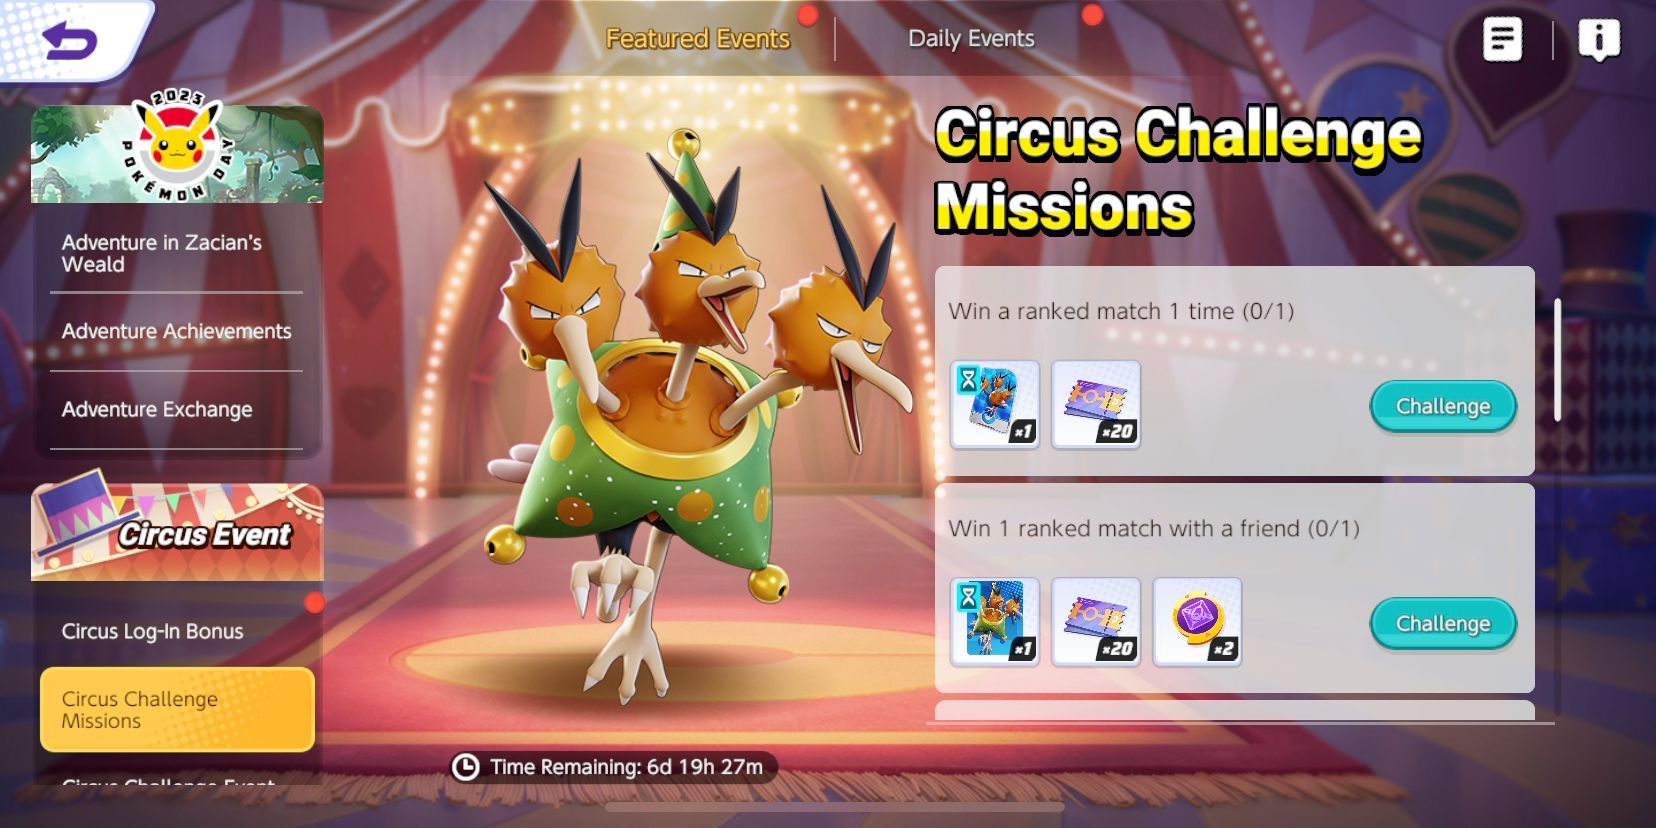 Экран Circus Challenge Missions от Pokemon Unite, показывающий миссии событий и награды